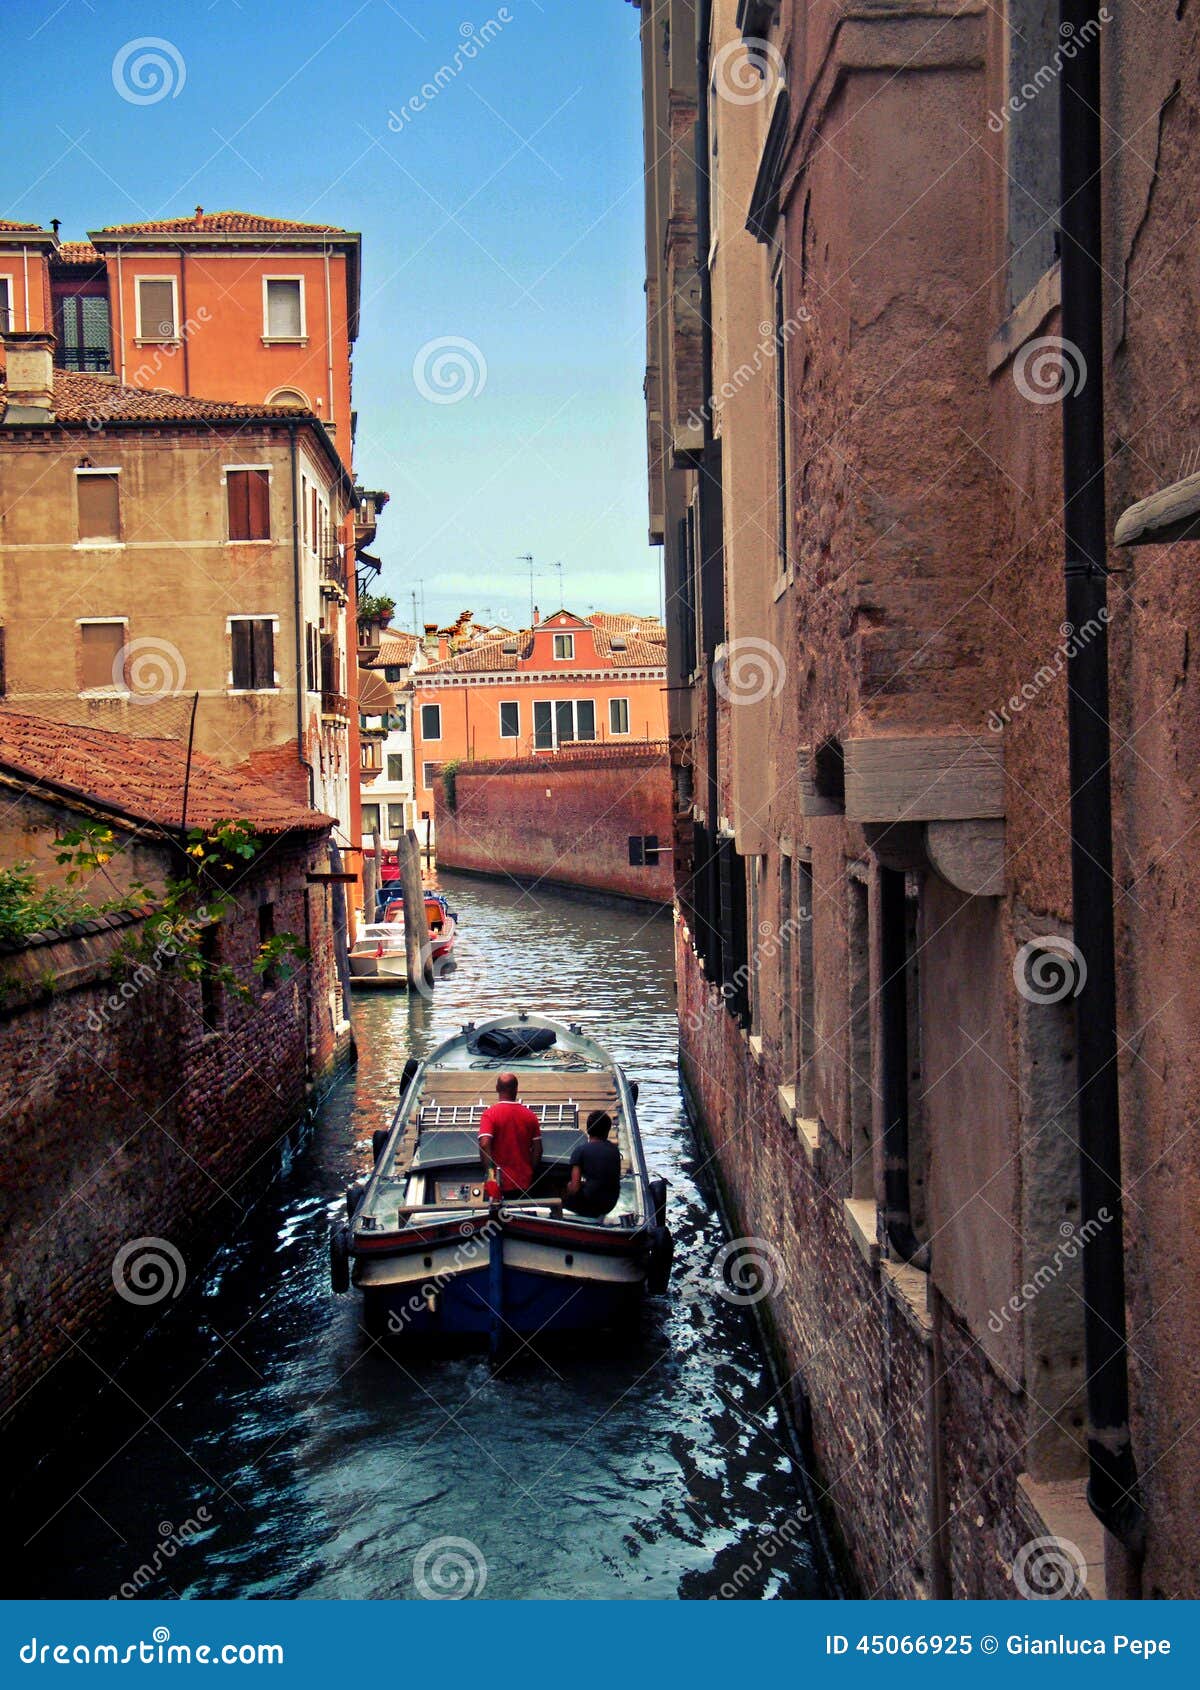 Venice Editorial Image - Image: 45066925